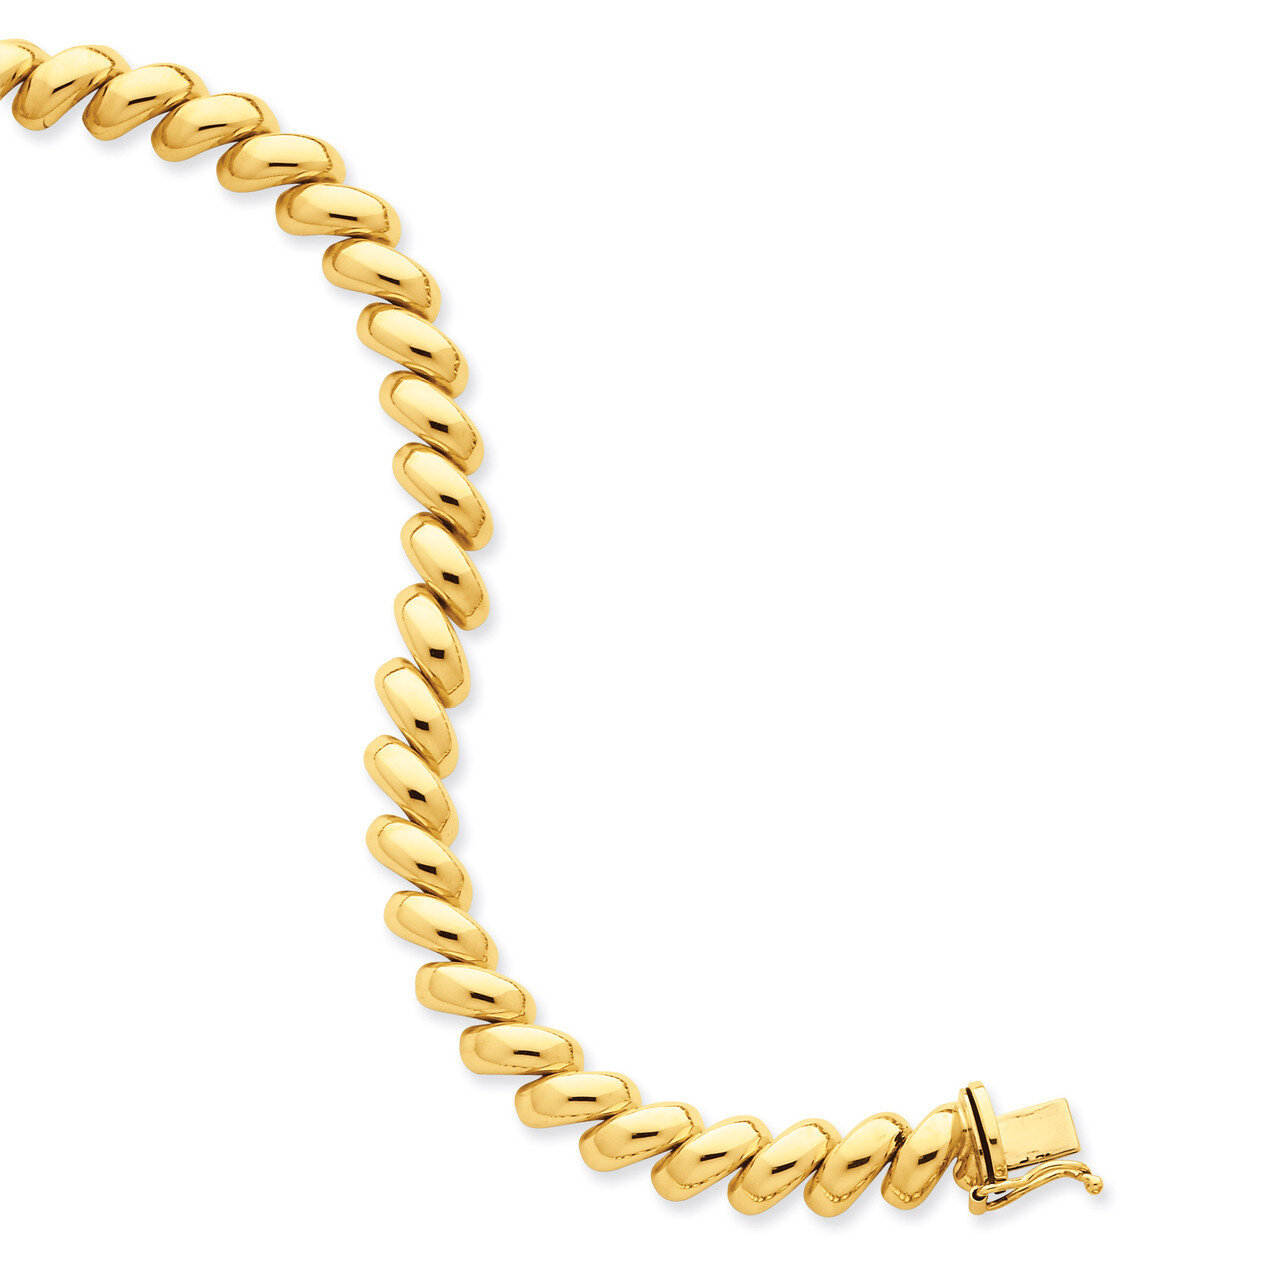 San Marco Bracelet 7 Inch 14k Gold SM14-7